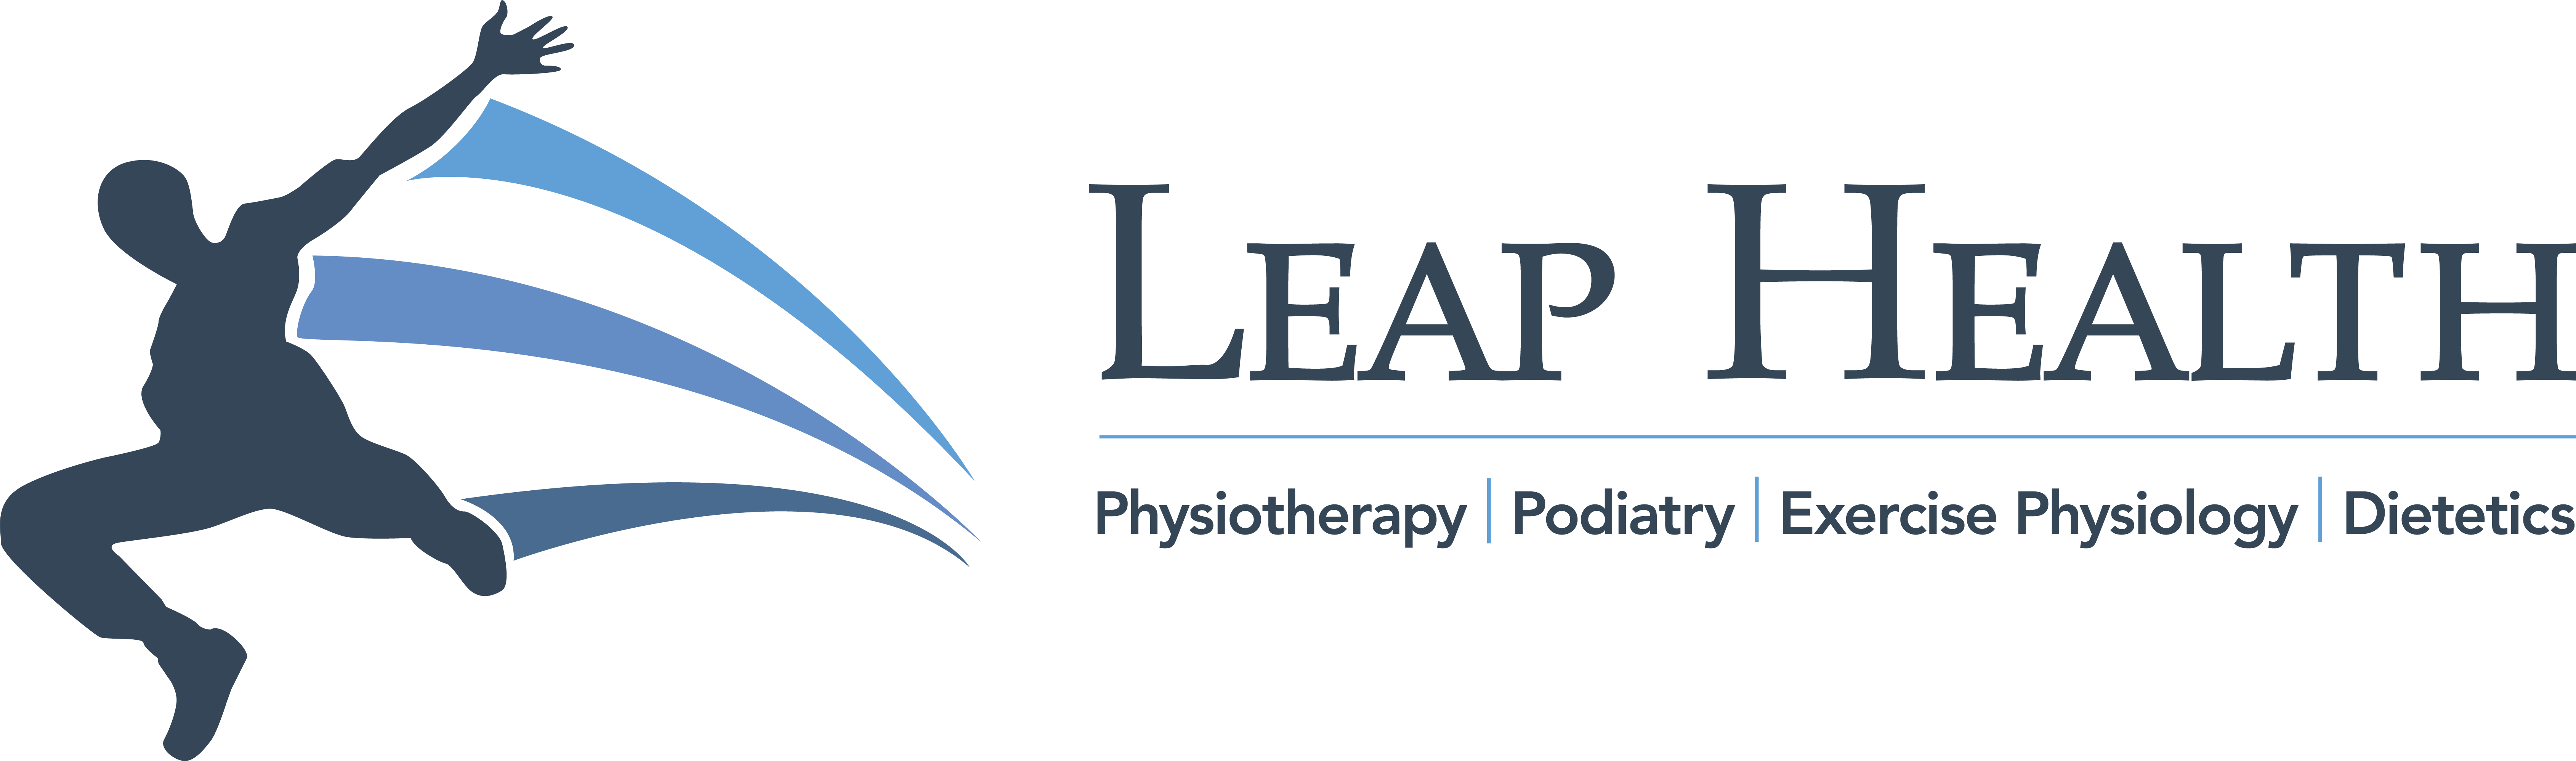 Leap Health